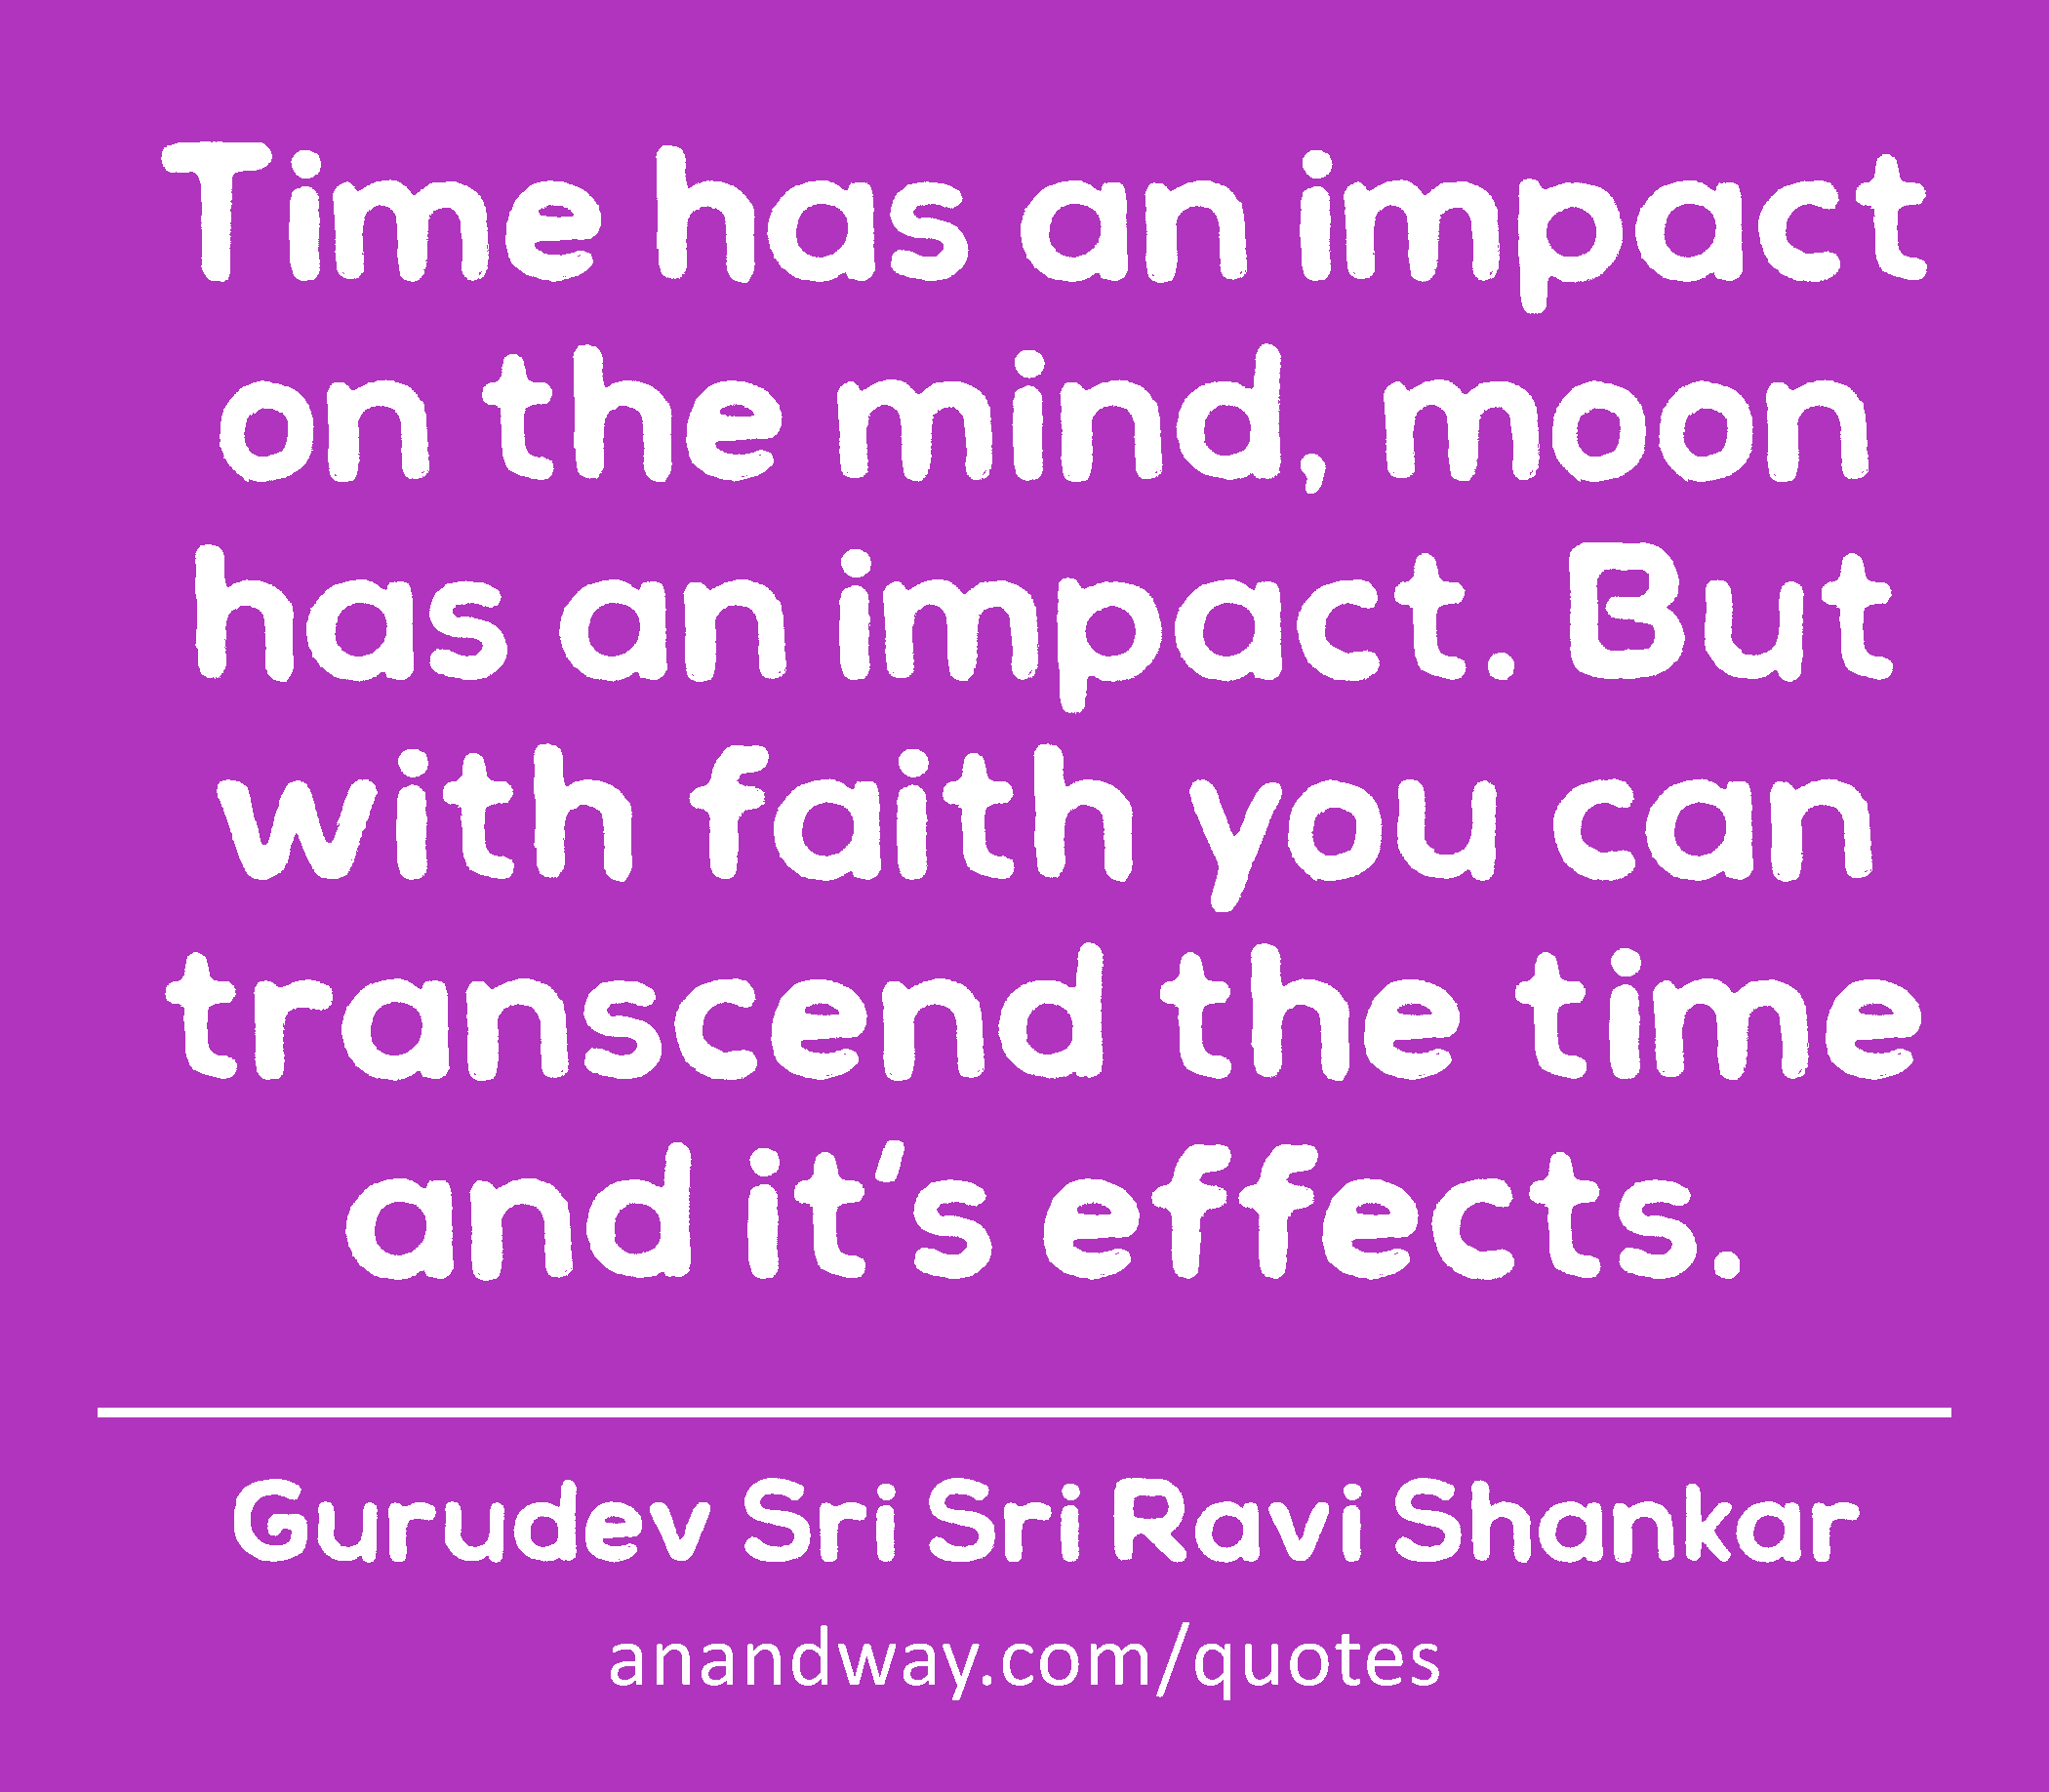 Time has an impact on the mind, moon has an impact. But with faith you can transcend the time and
 -Gurudev Sri Sri Ravi Shankar